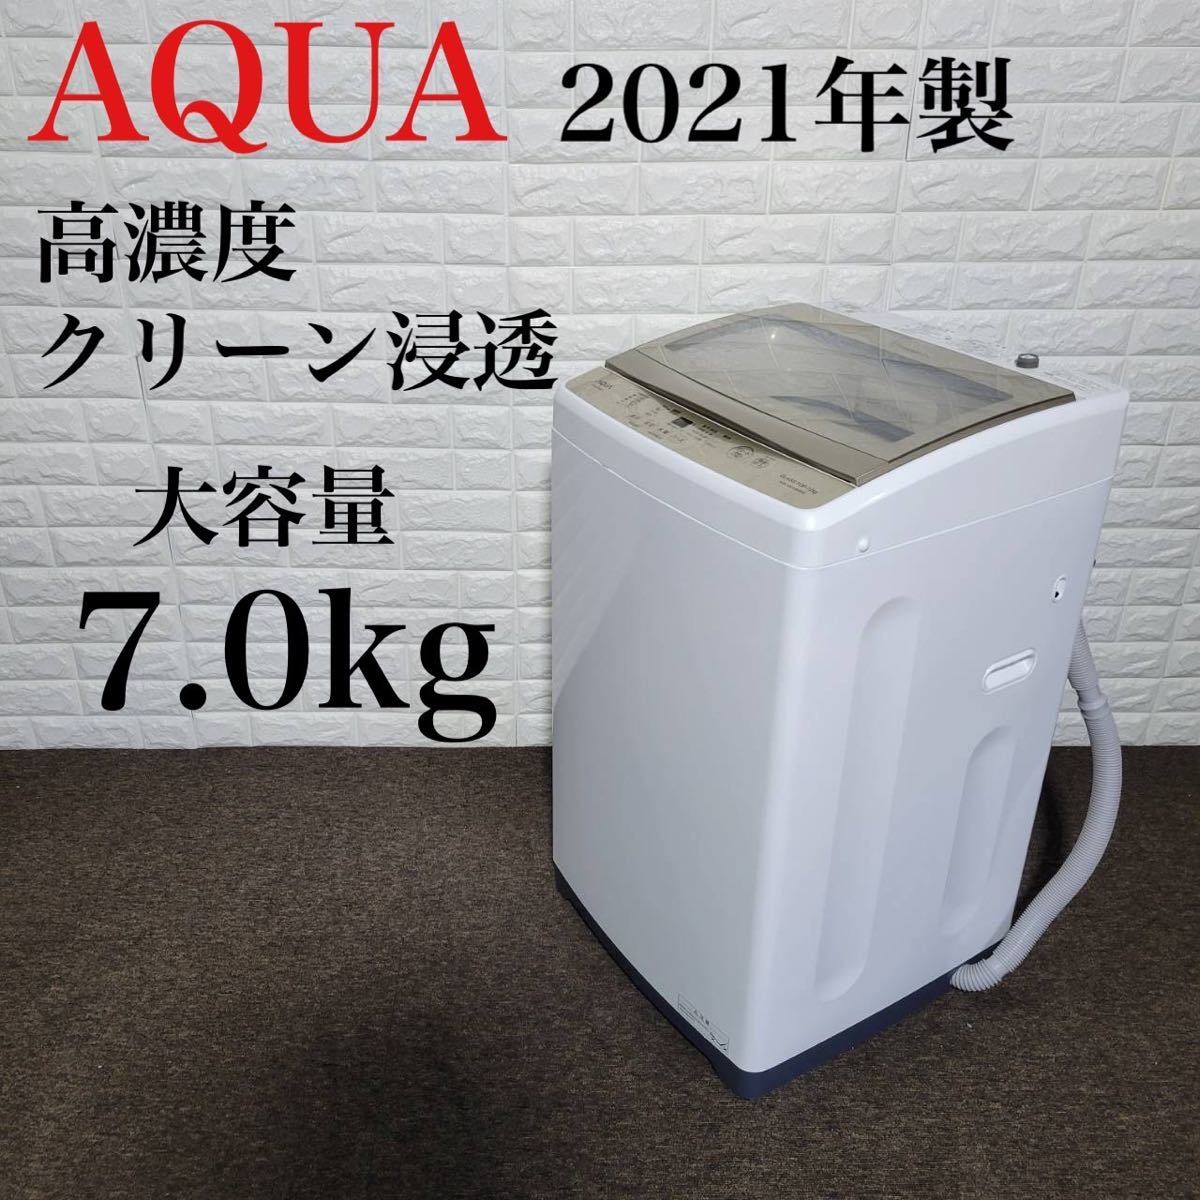 AQUA 洗濯機 AQW-GS70JBK 2021年 高年式 7kg M0112-